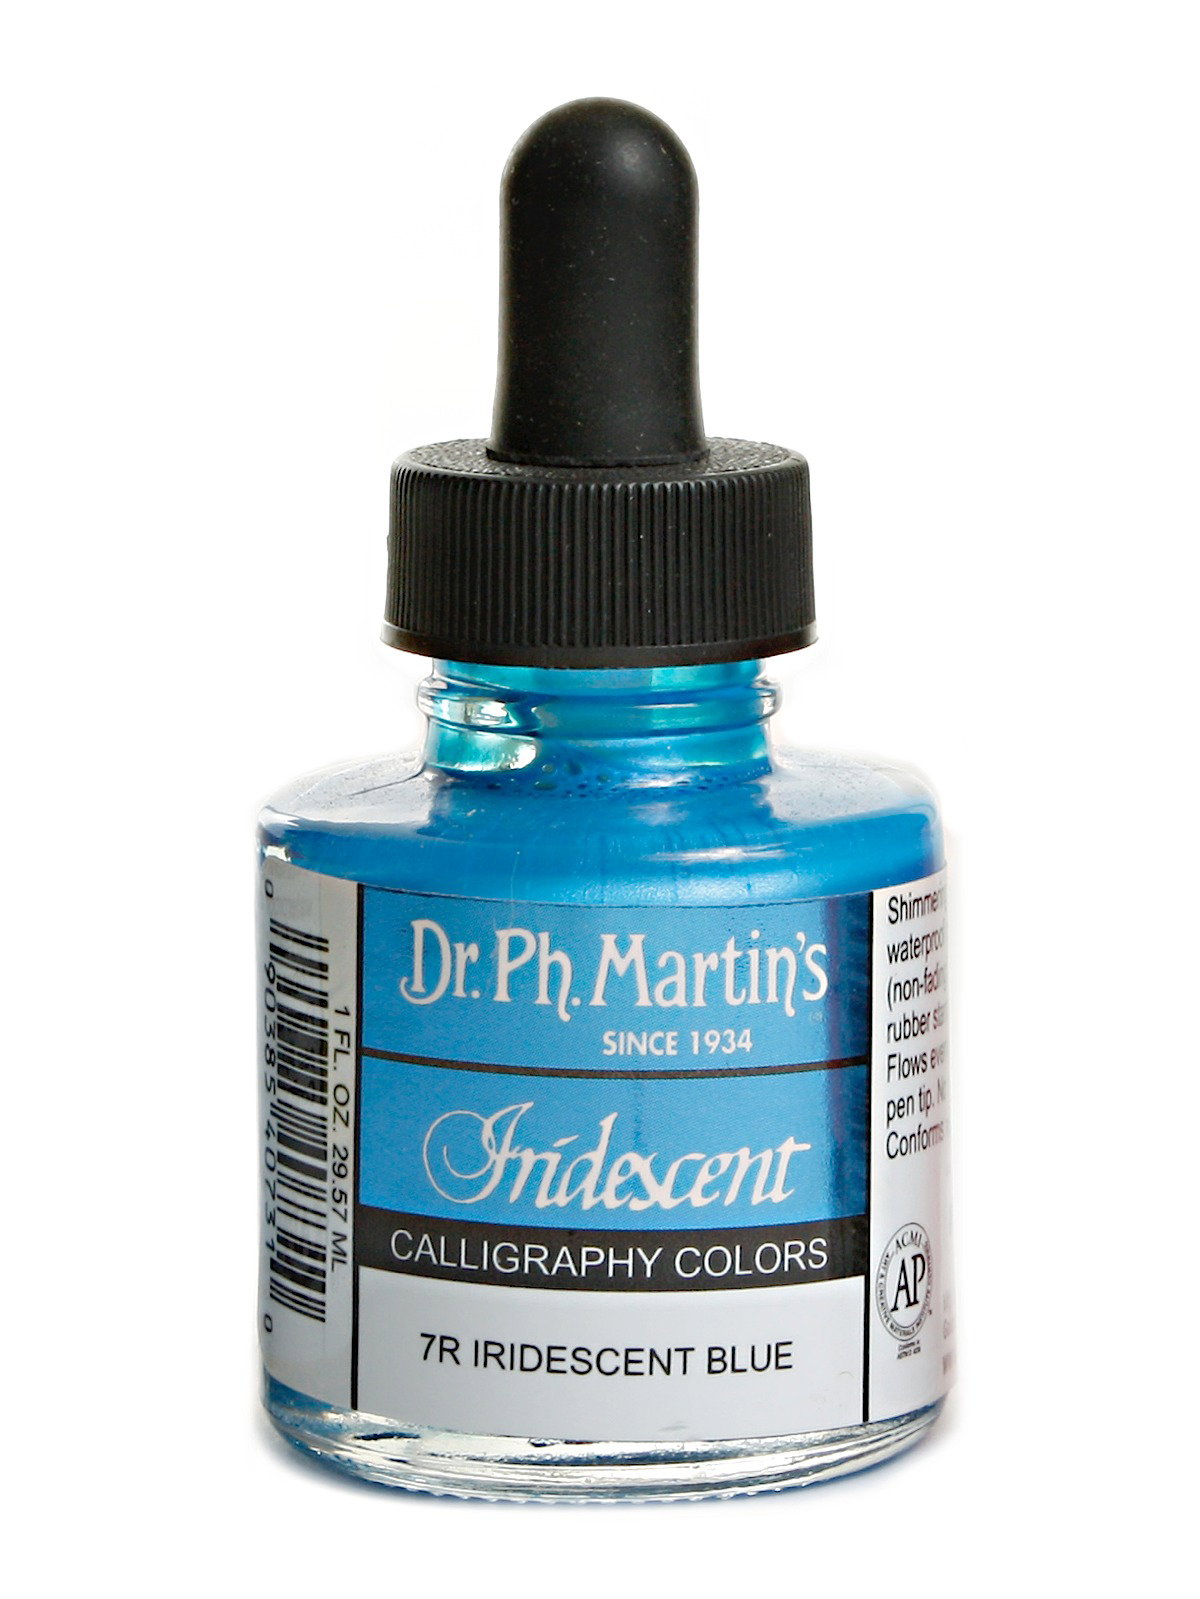 Dr. Ph. Martin's Iridescent Calligraphy Colors 1 oz. | MisterArt.com